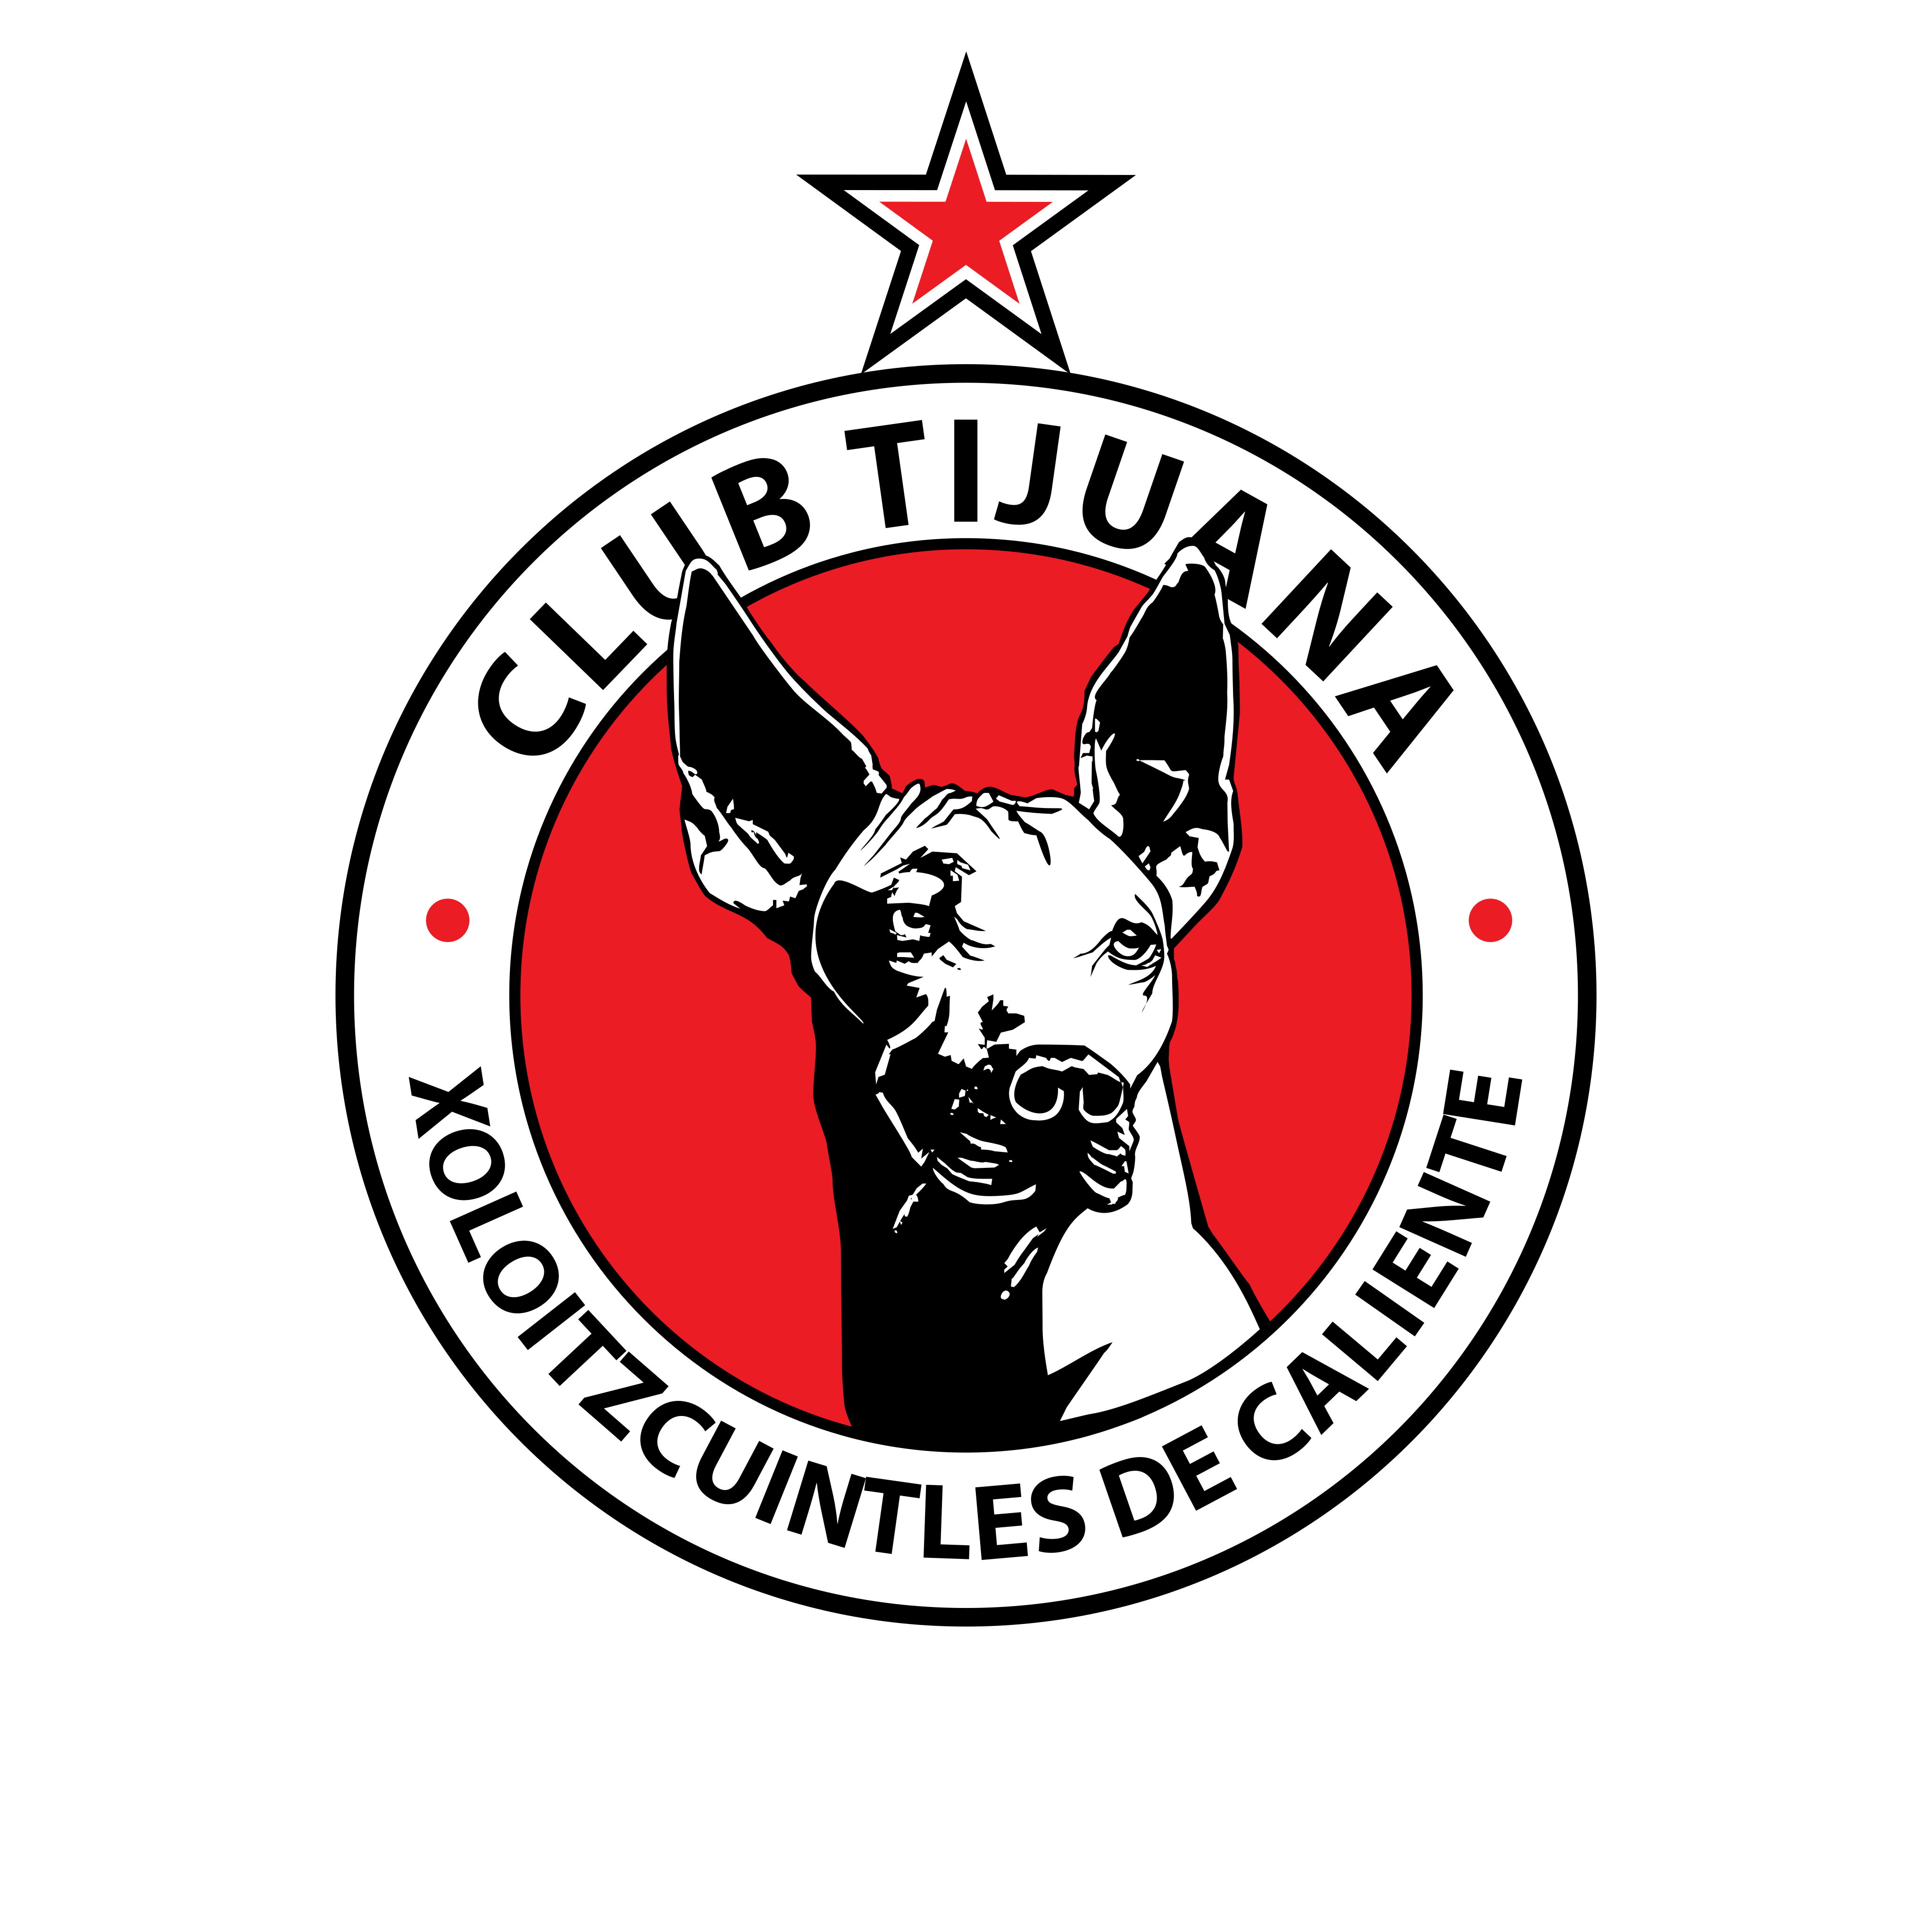 club tijuana logo 0 - Club Tijuana Logo